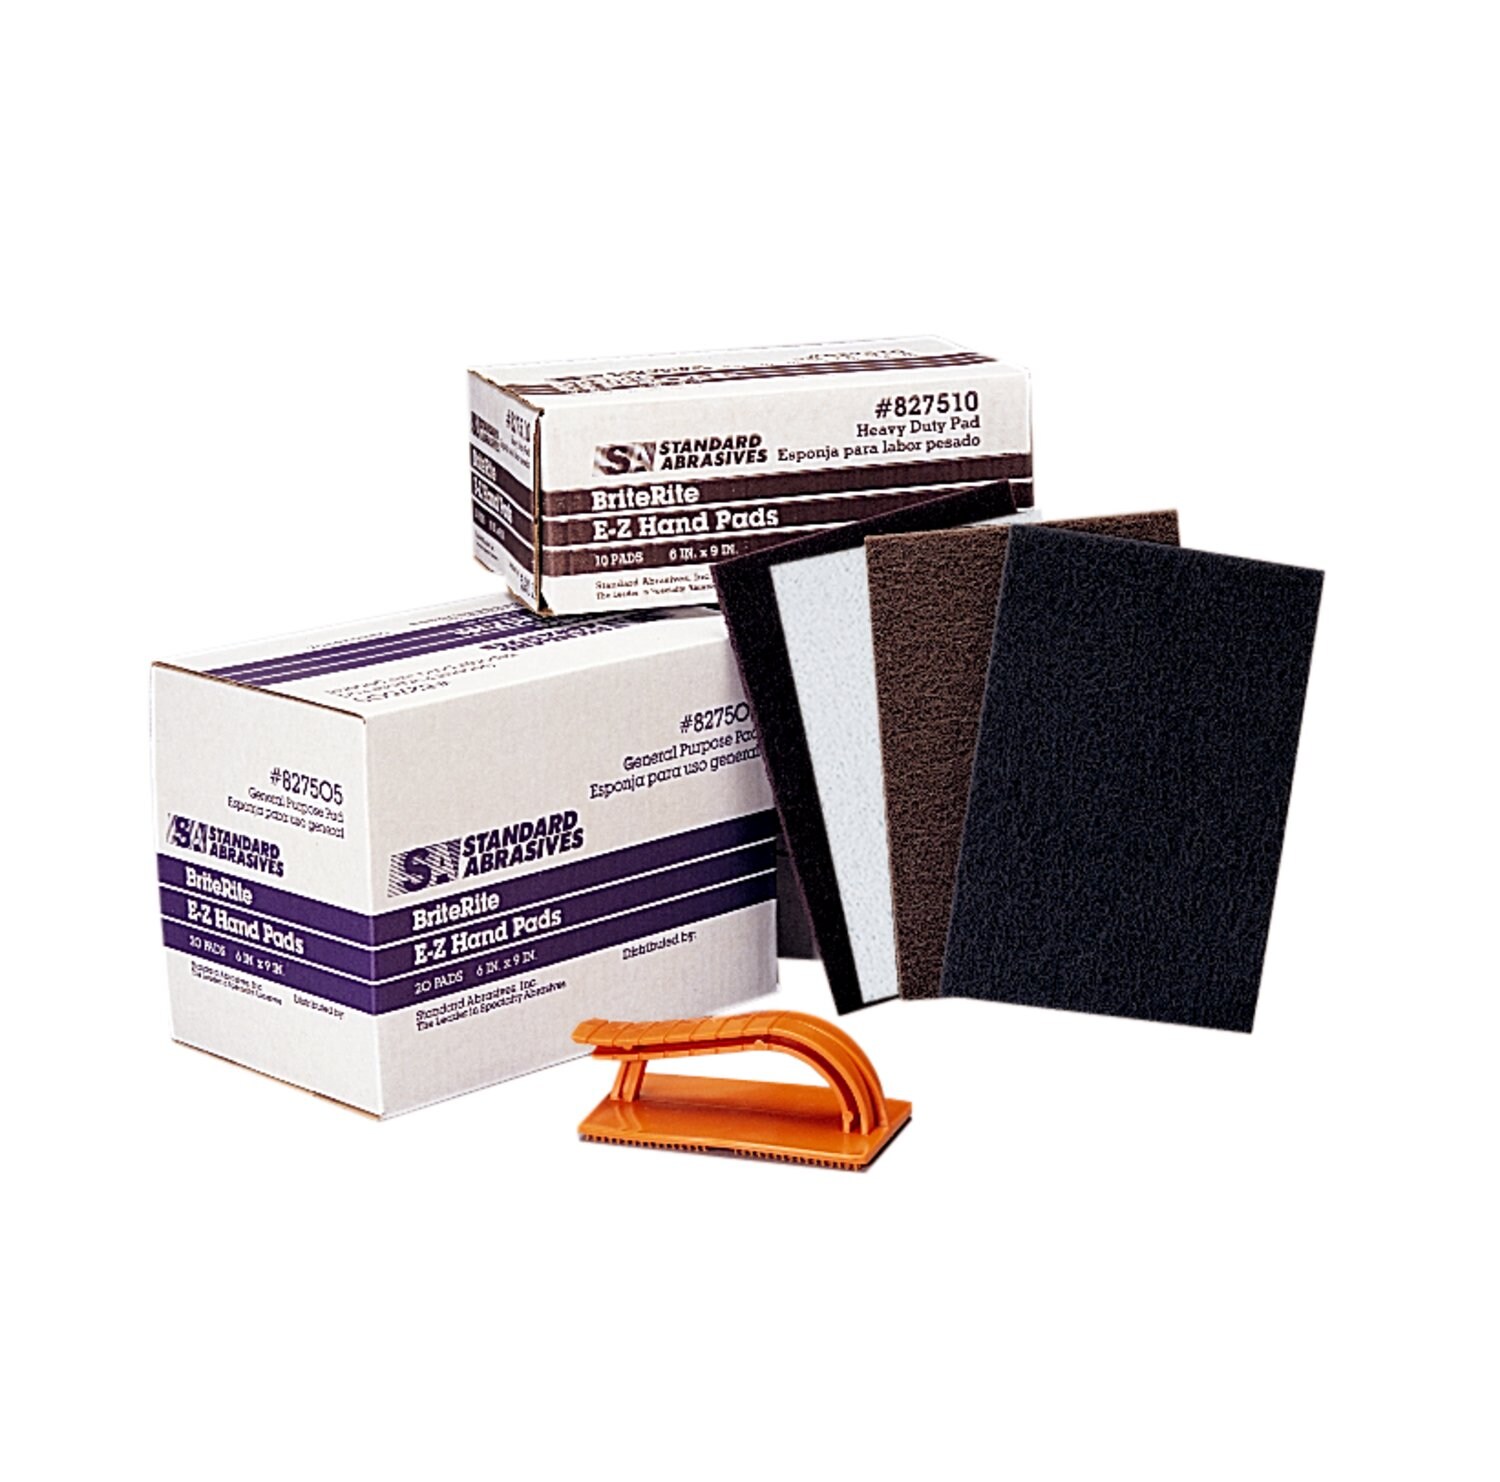 7000046755 - Standard Abrasives General Purpose Hand Pad 827505, 6 in x 9 in,
20/Carton, 60 ea/Case